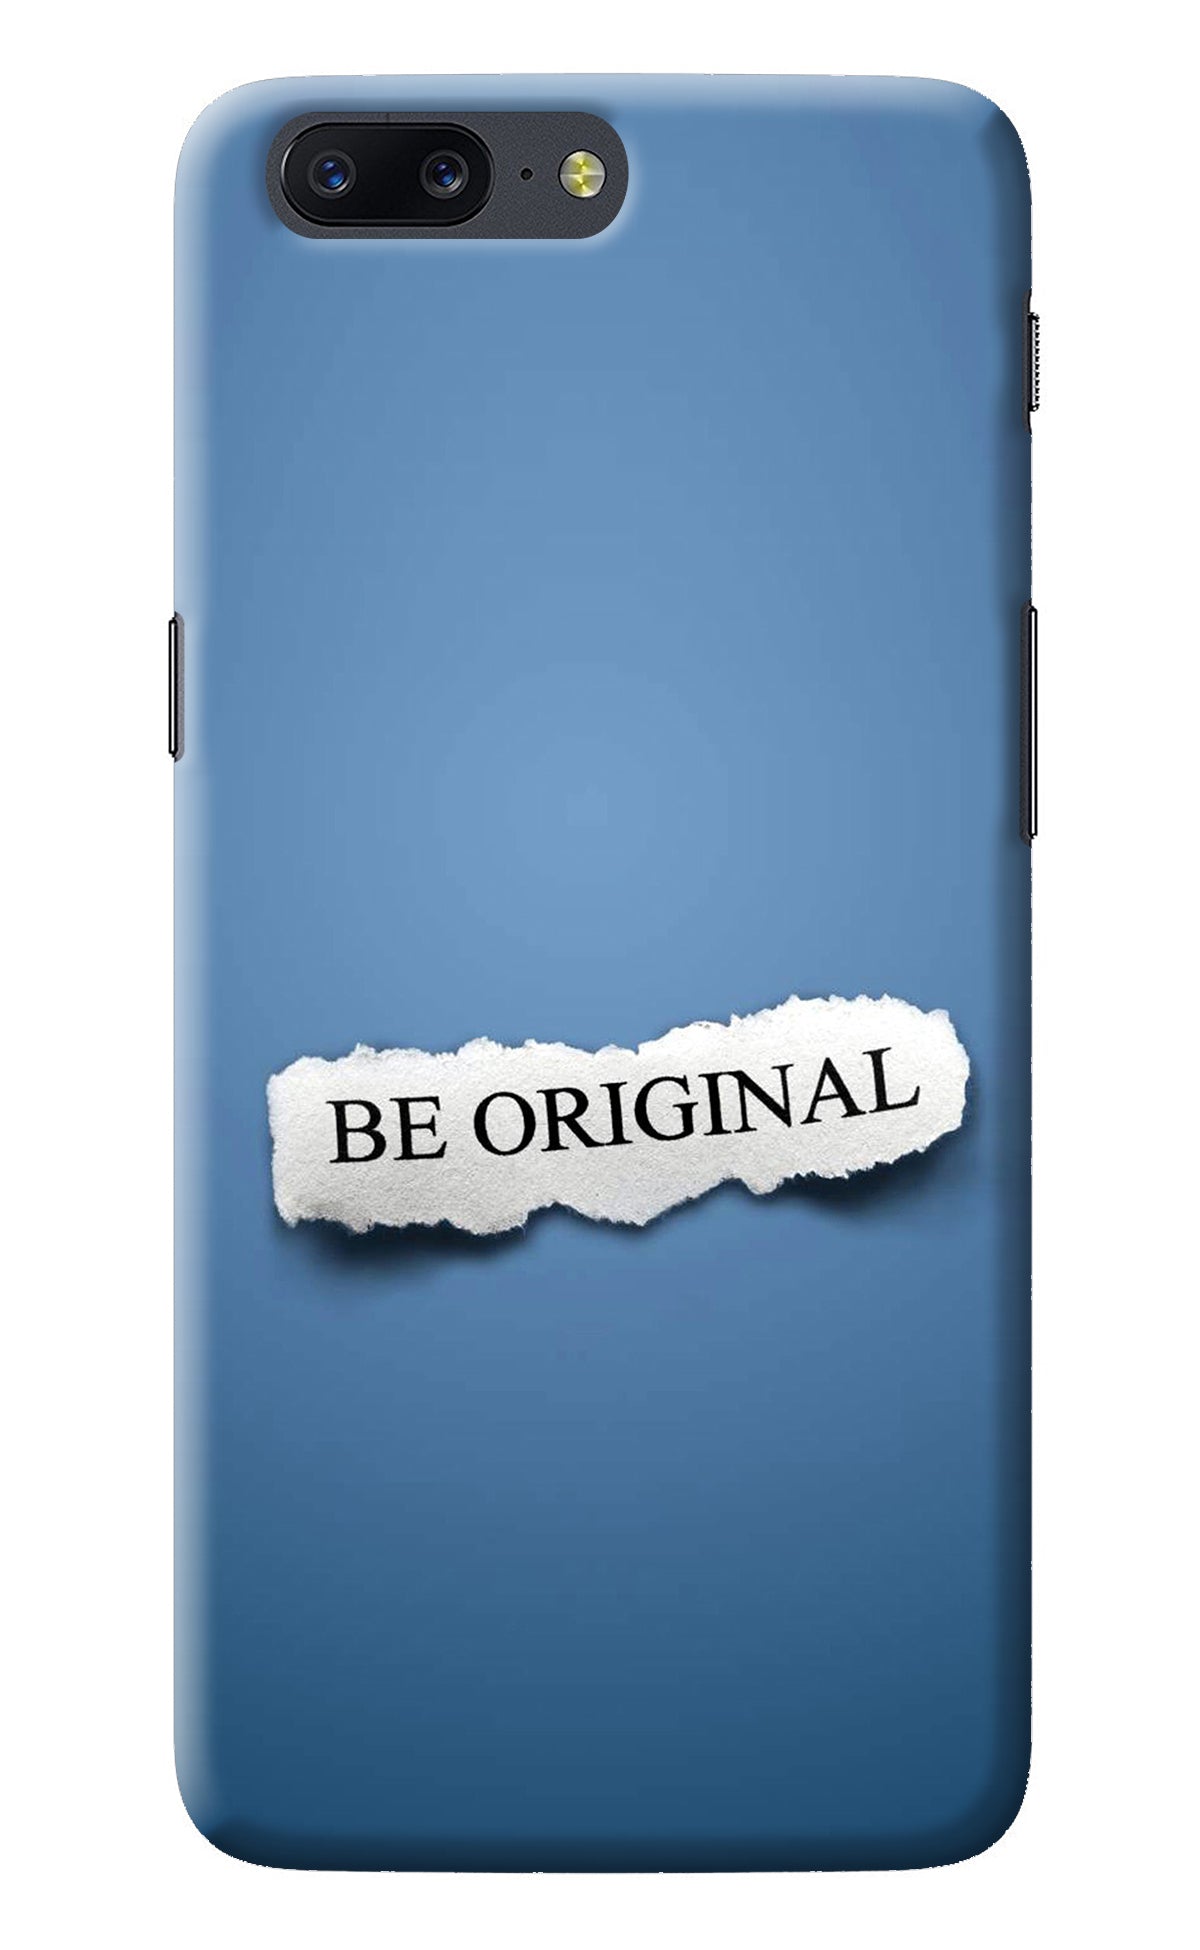 Be Original Oneplus 5 Back Cover